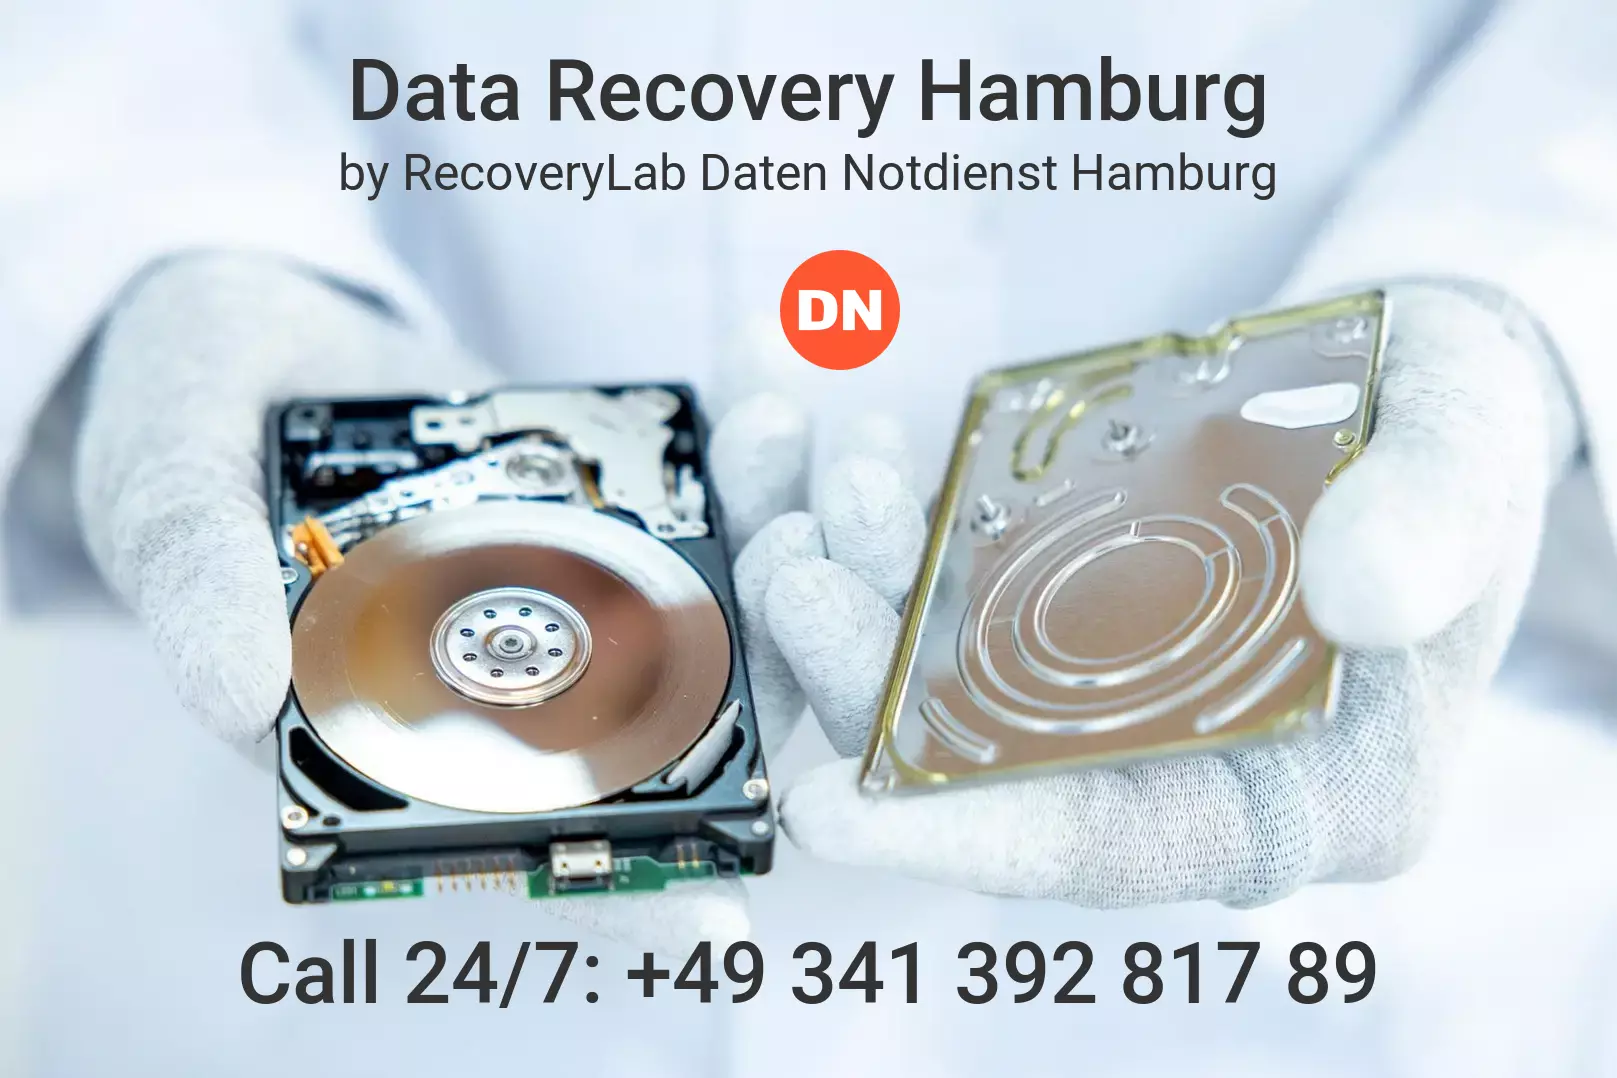 Data Recovery Lab Hamburg